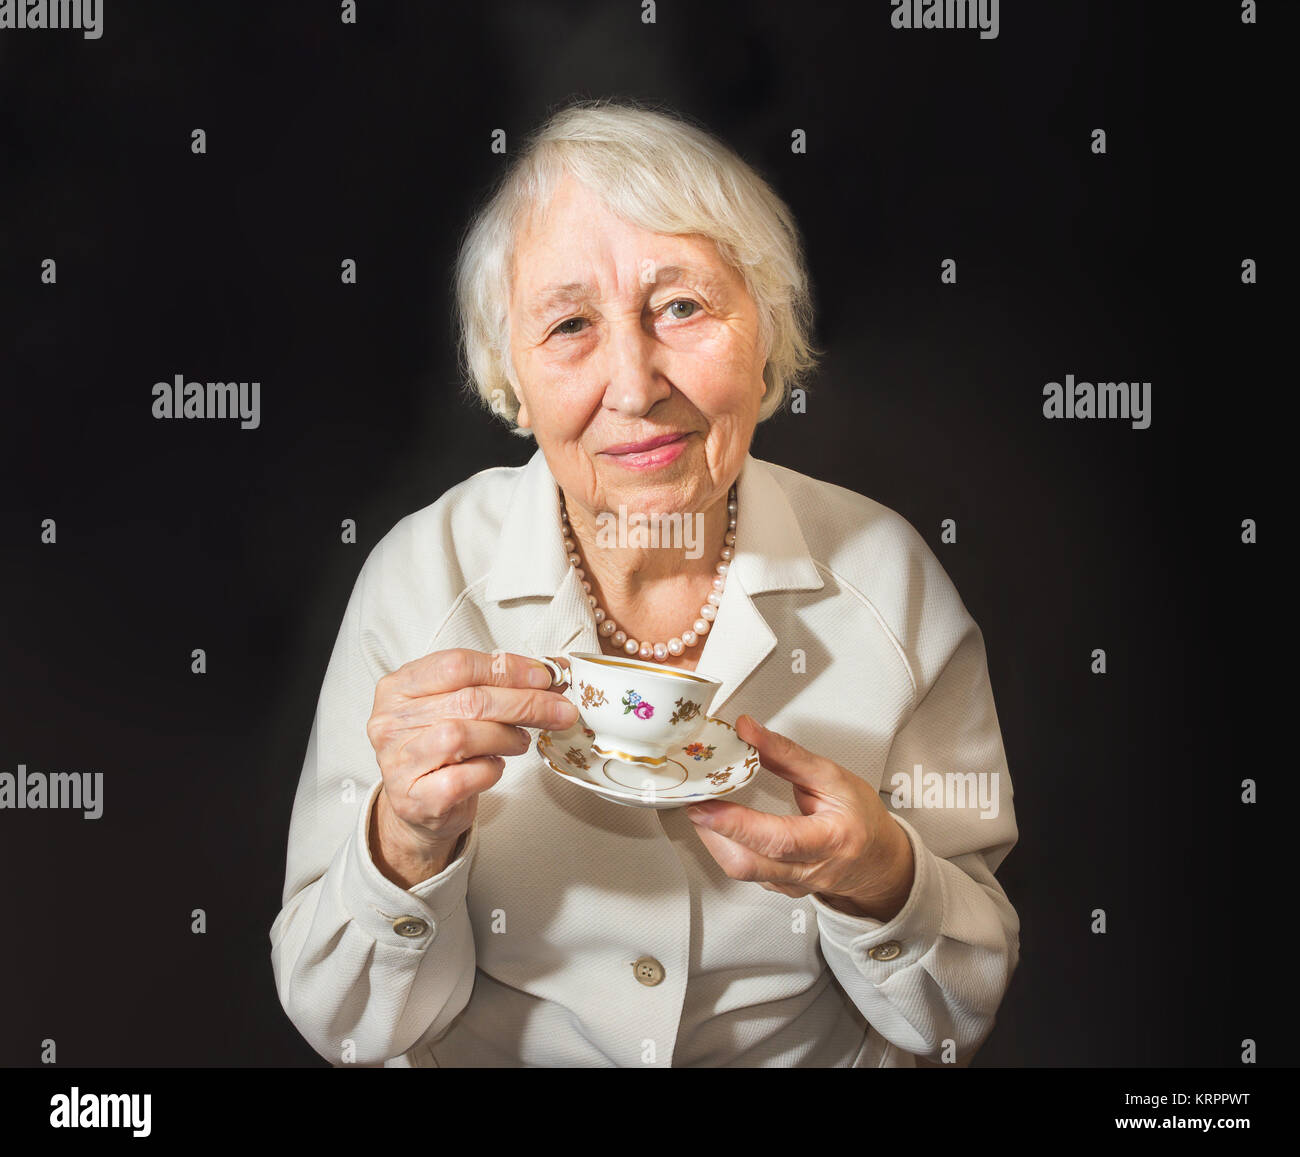 Senior Woman Enjoying Cup Of Tea Stock Photo